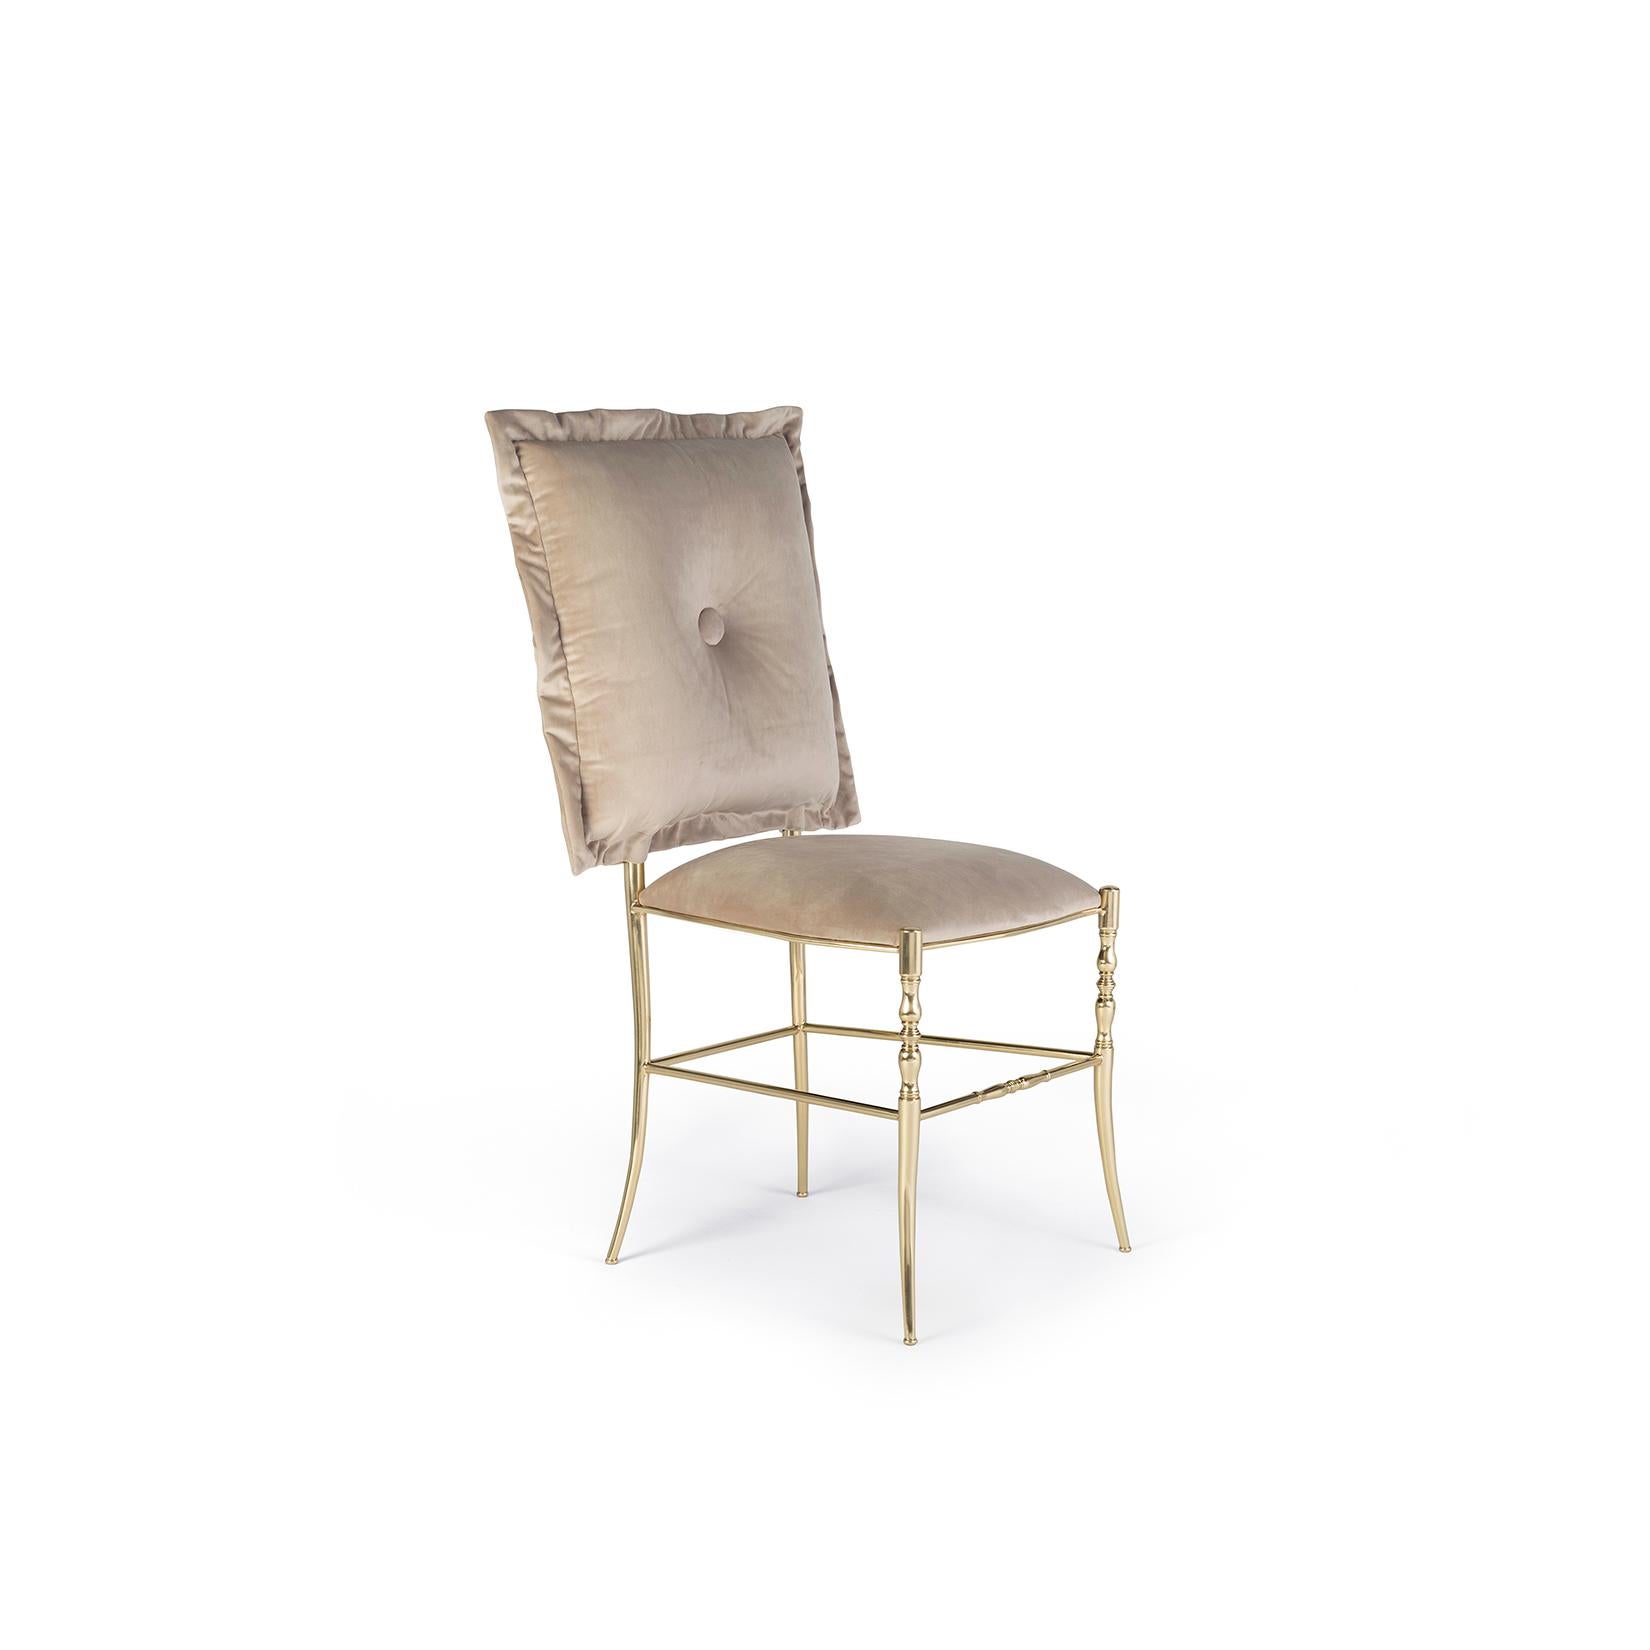 Portuguese Modern Classic Chiavarina Dining Chair, Beige Velvet Upholstery, Brass Cast Foot For Sale